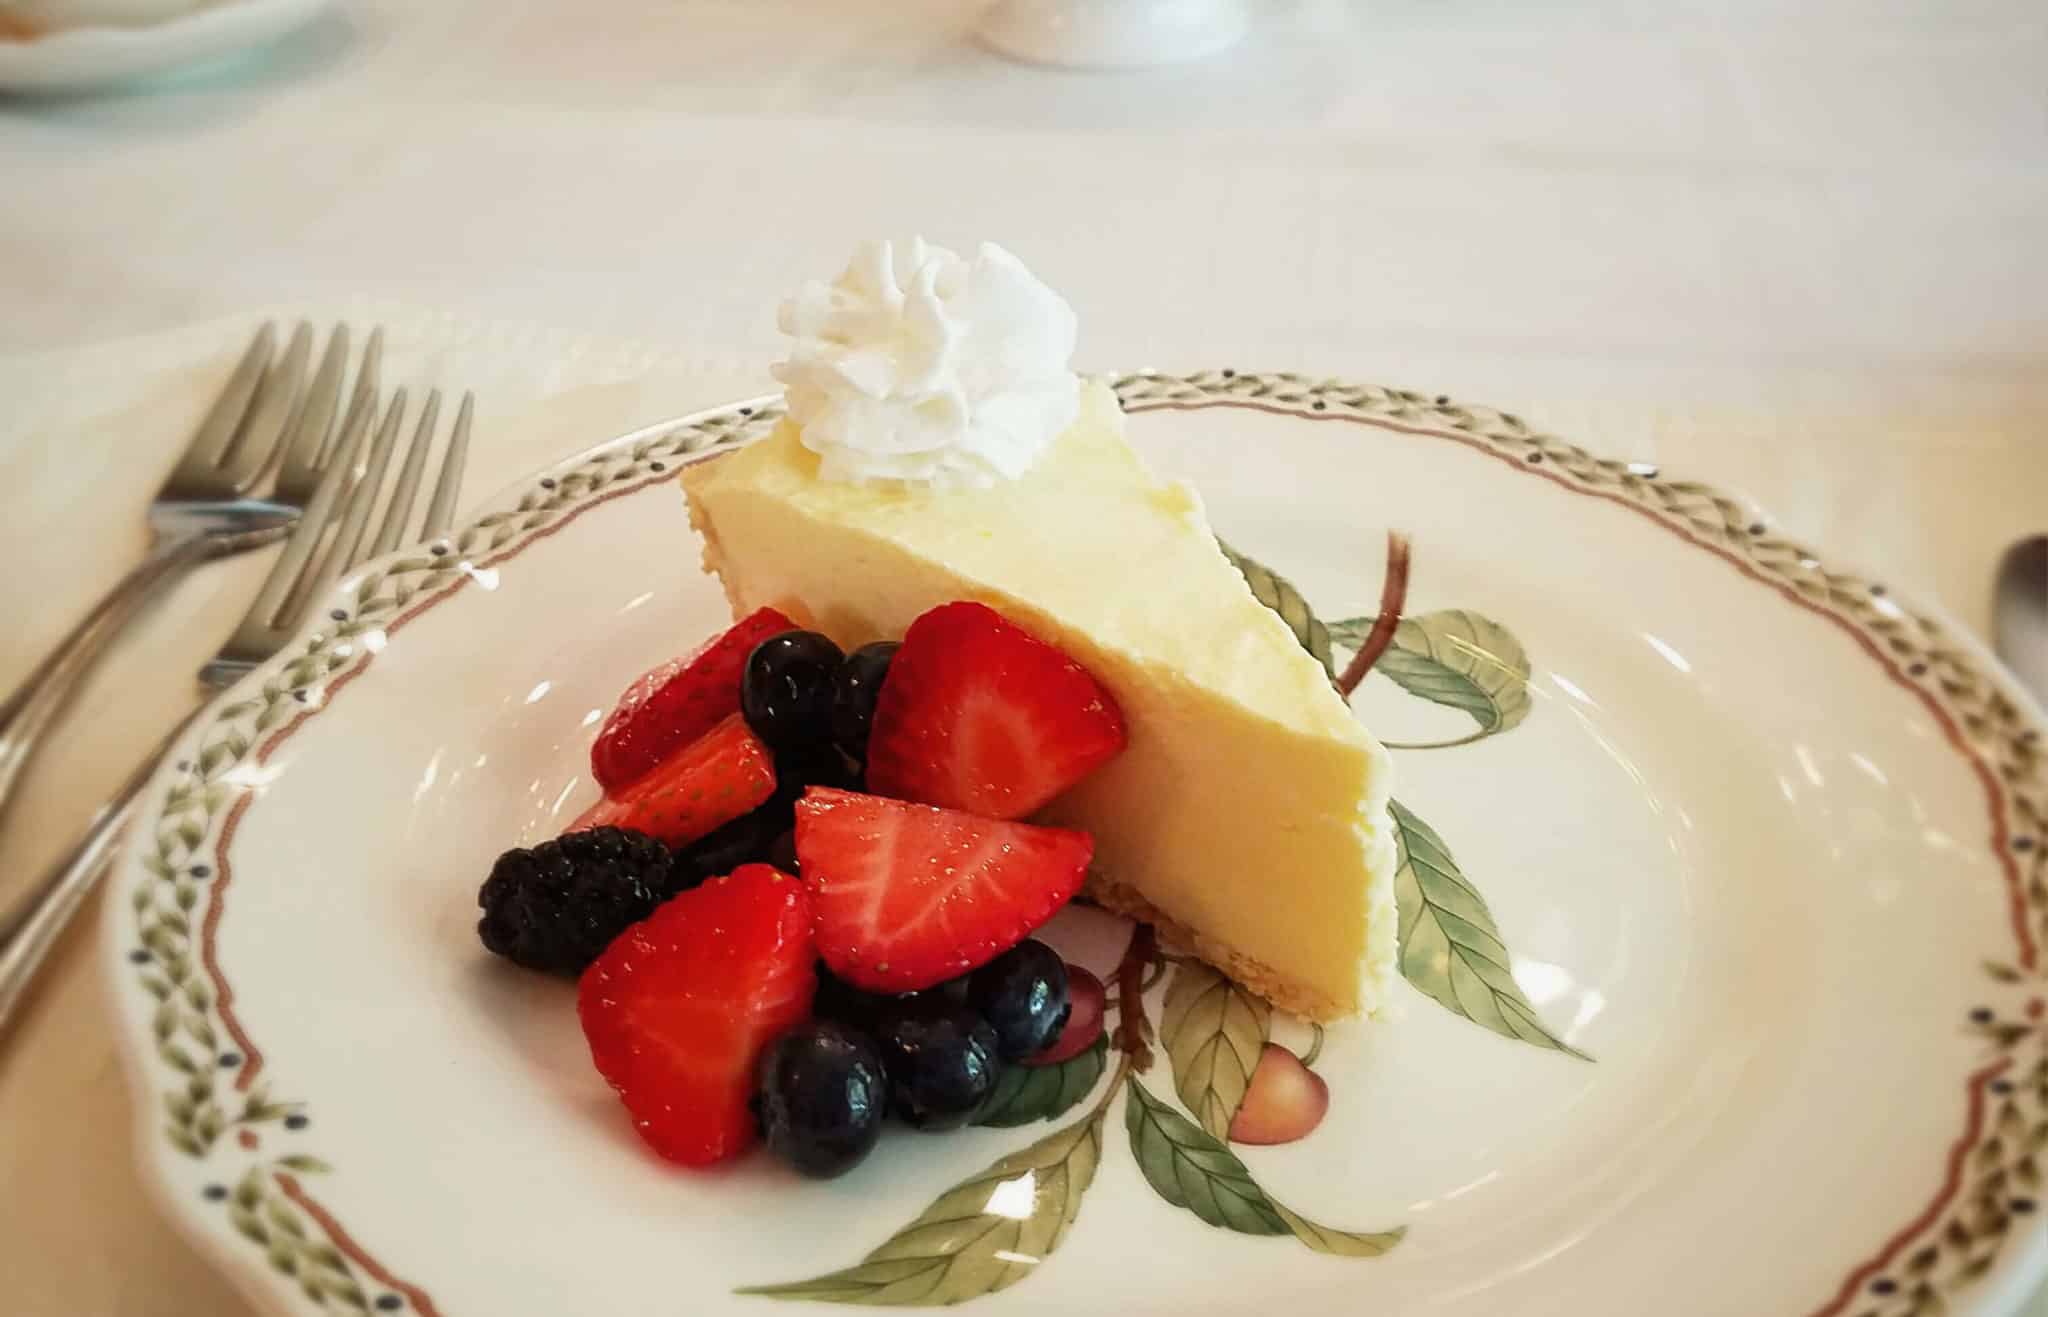 Frozen lemon tart with fresh berries and whipped cream.